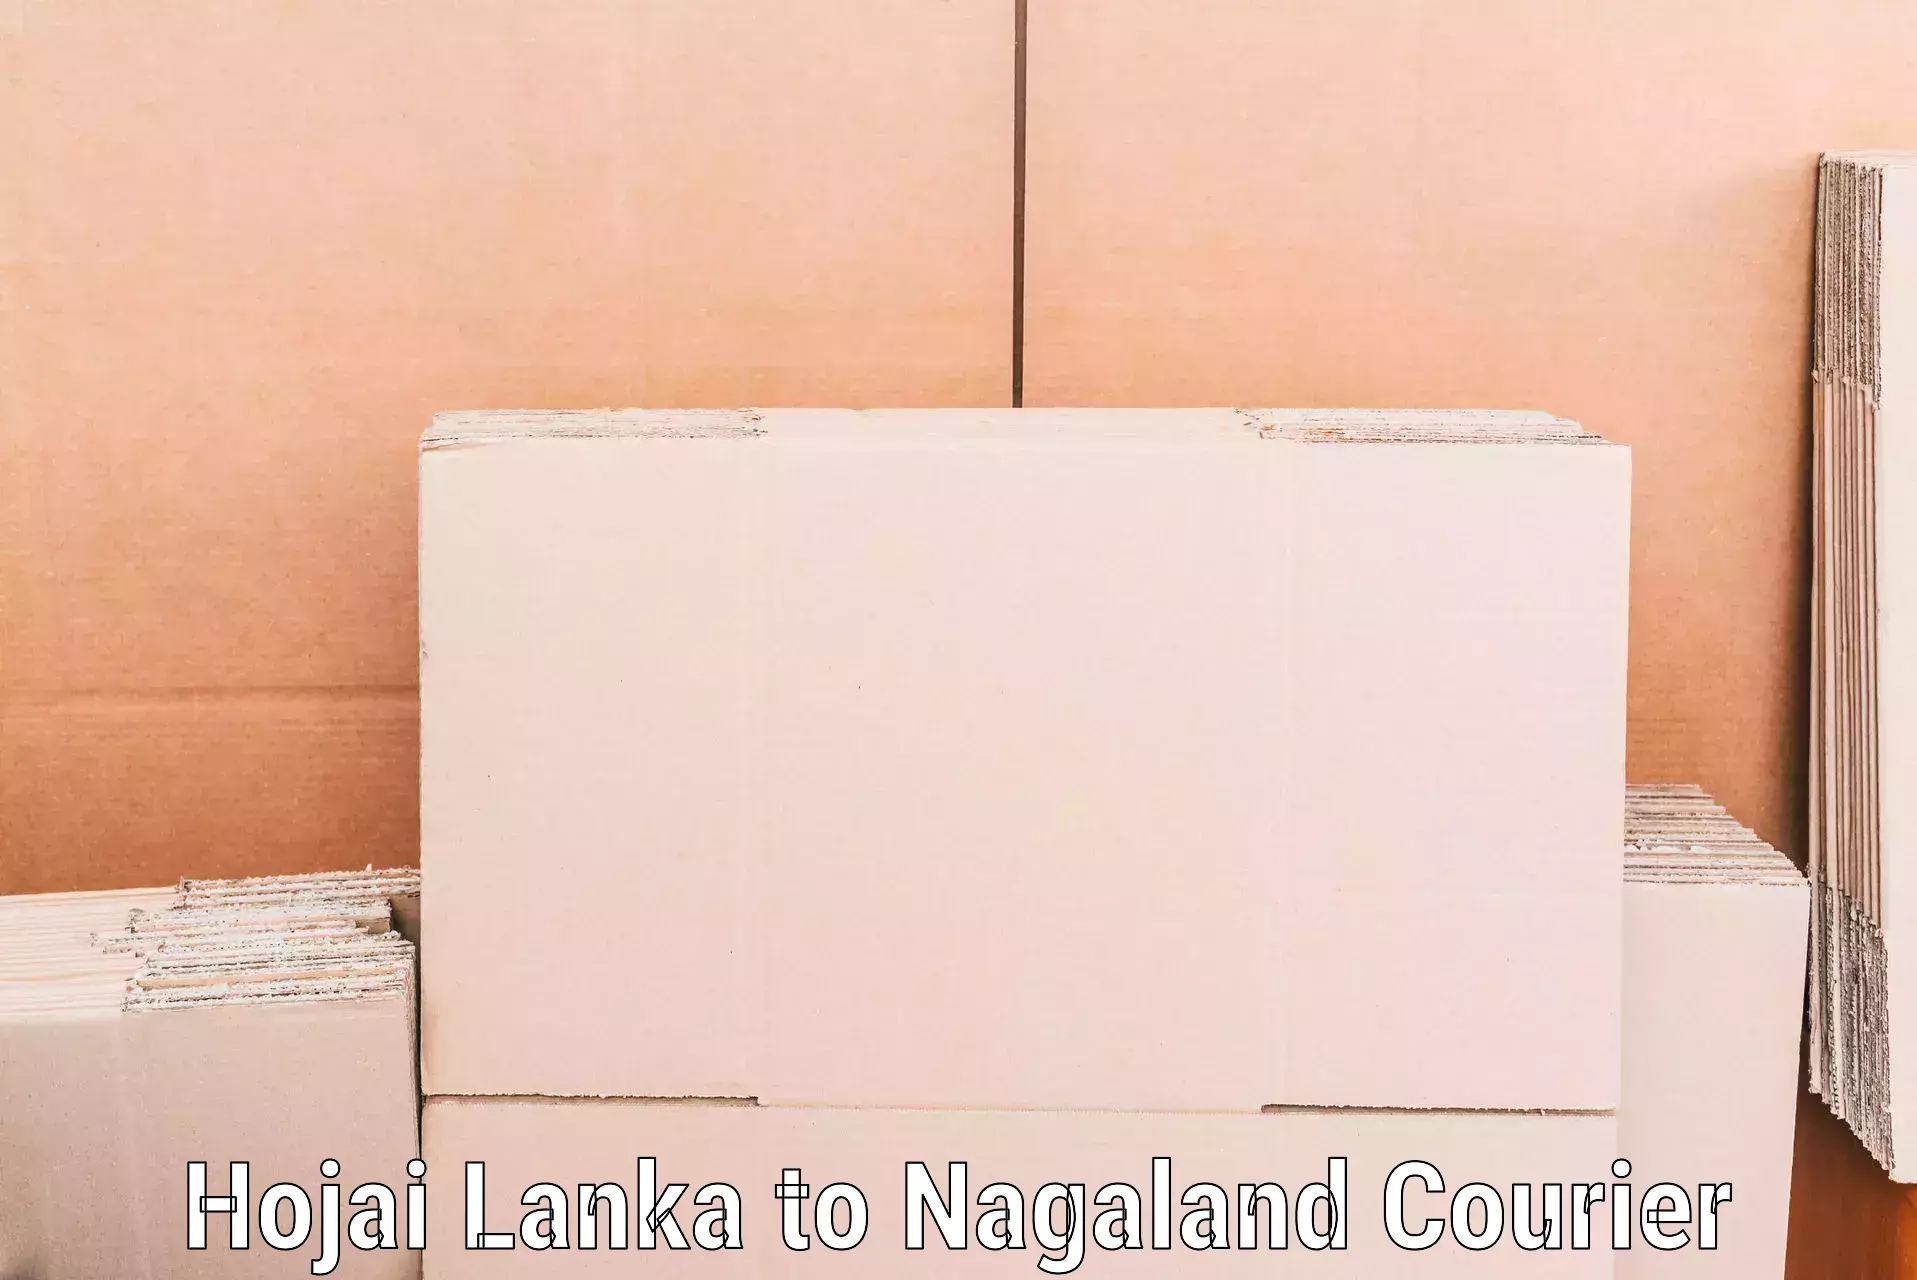 Full-service relocation in Hojai Lanka to Nagaland